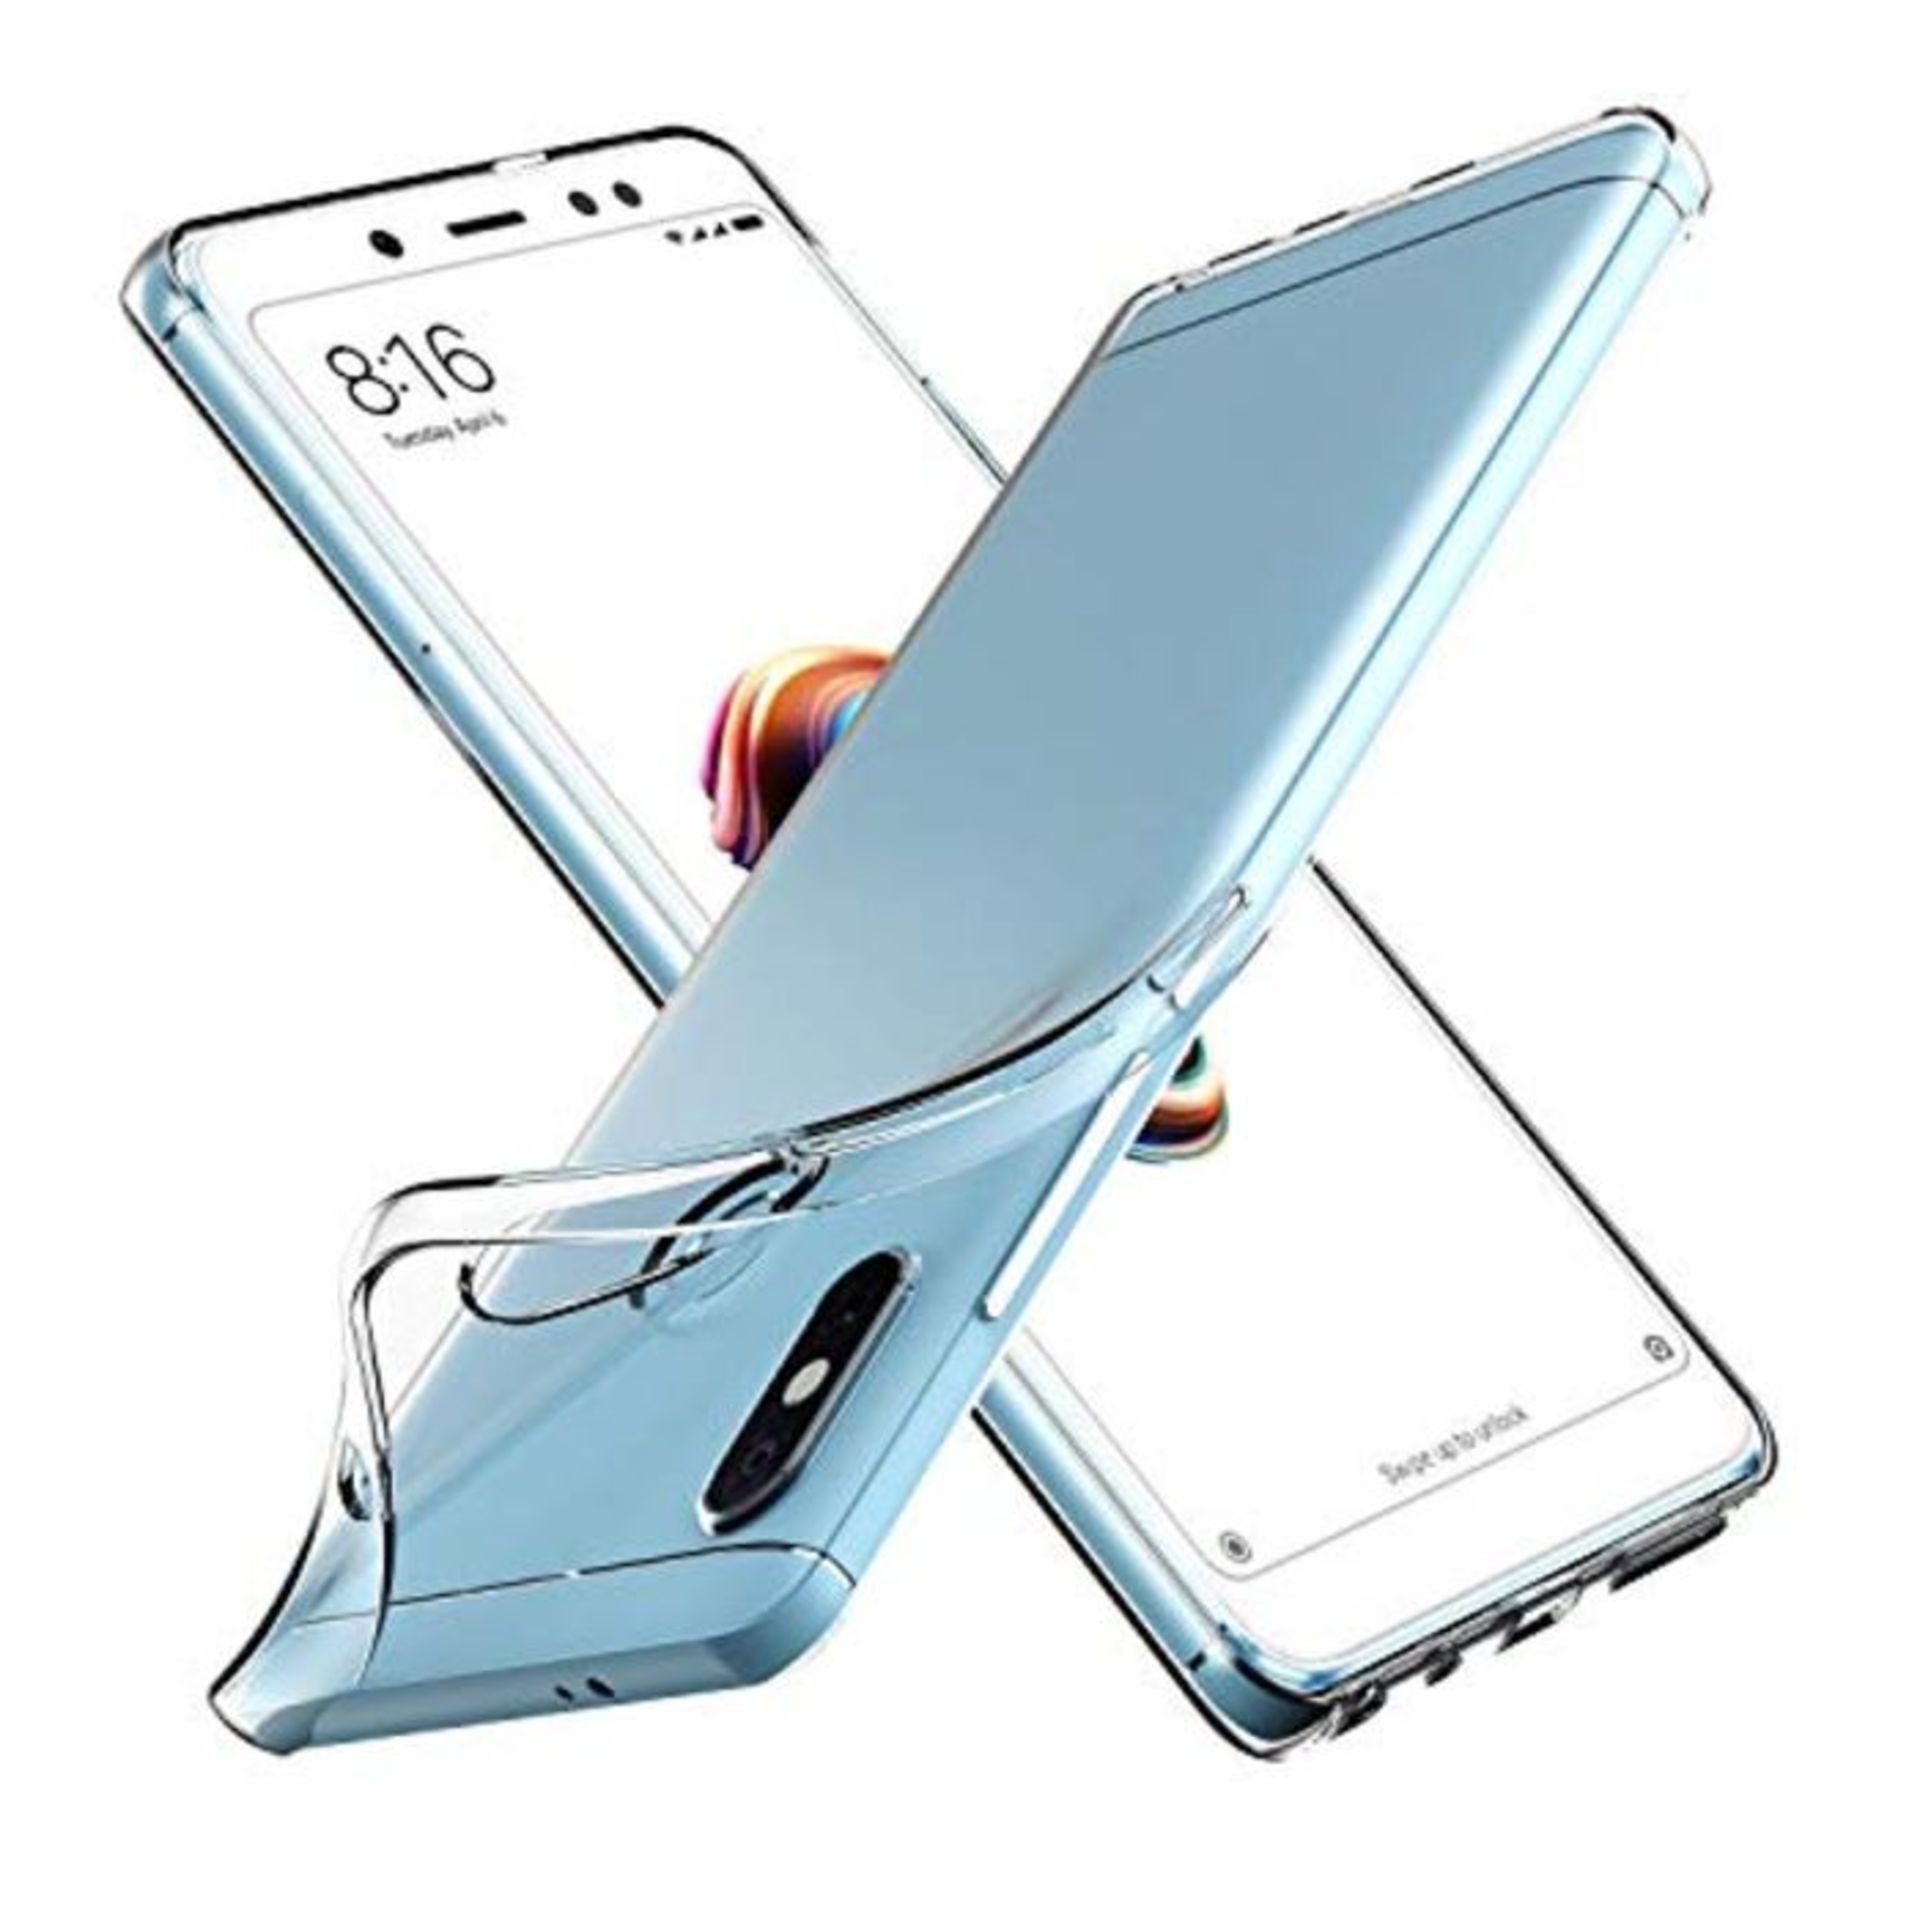 ivoler Cover Case for Xiaomi Redmi Note 5 / Xiaomi Redmi Note 5 Pro, Transparent Flexi